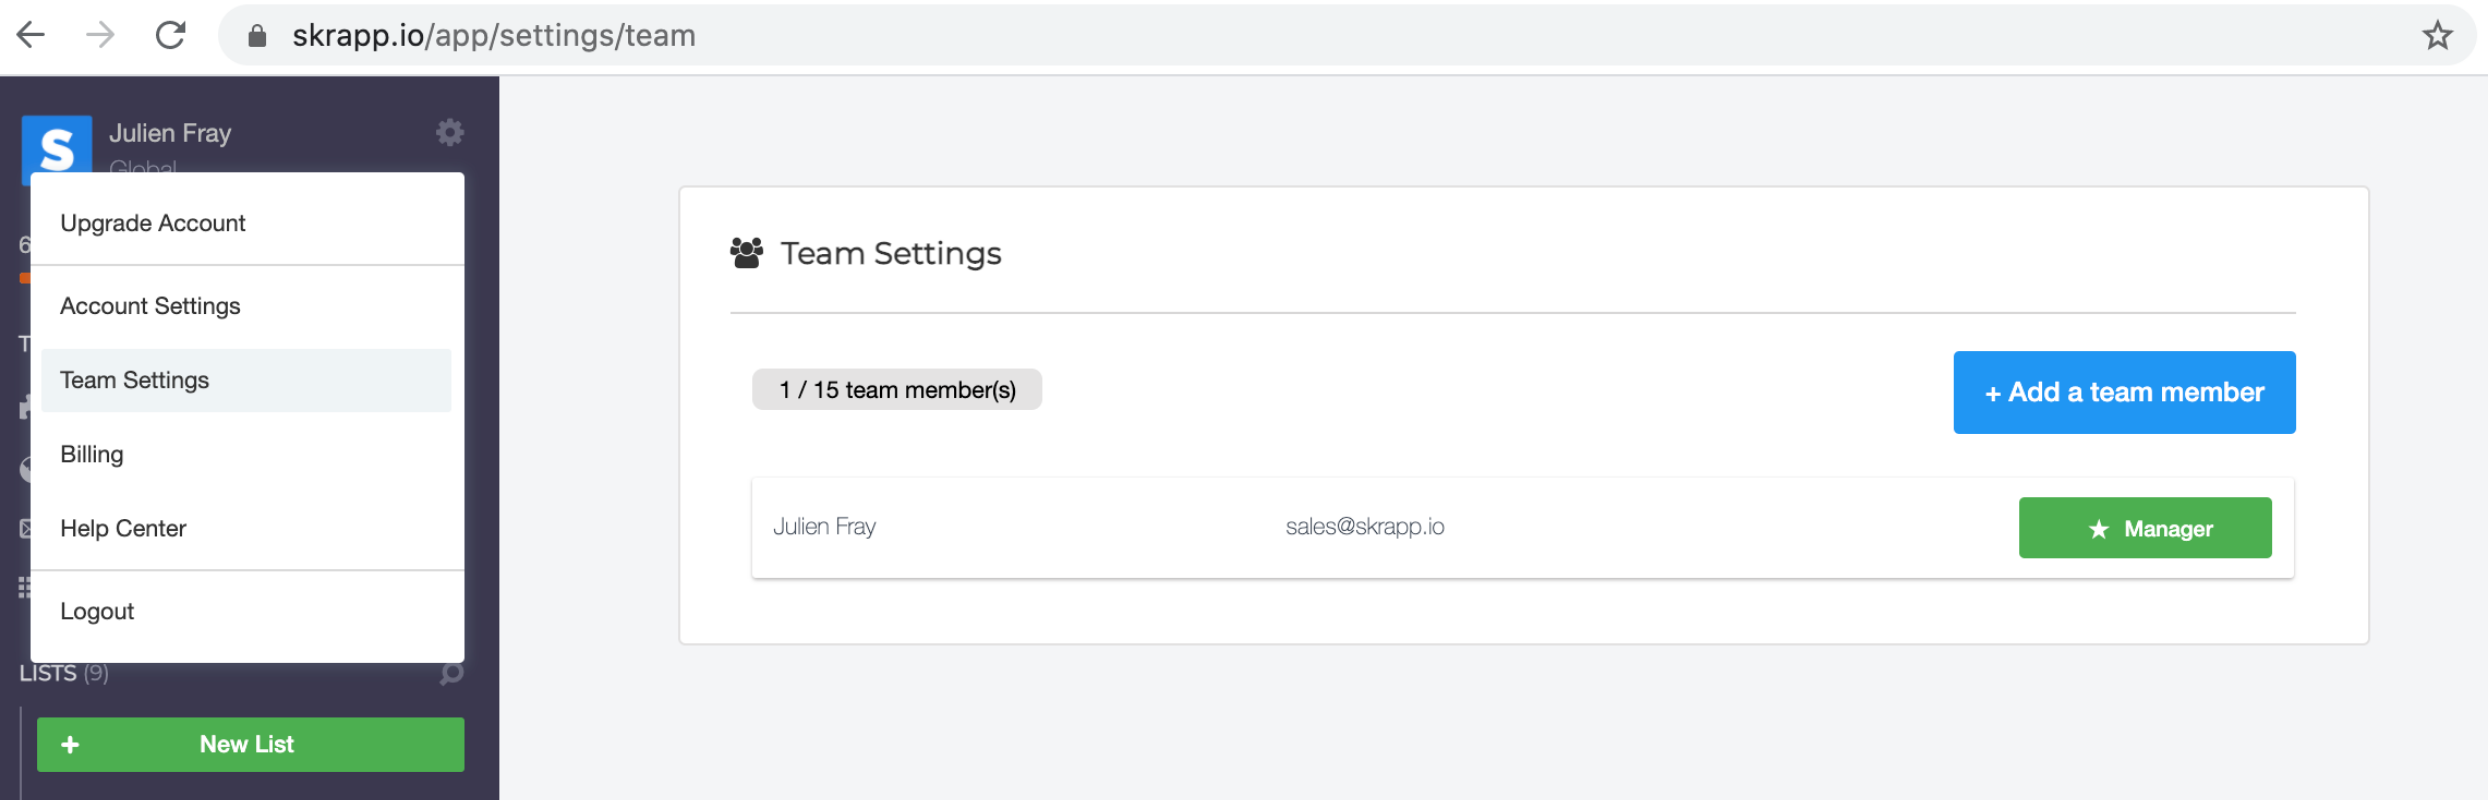 team_settings2.png